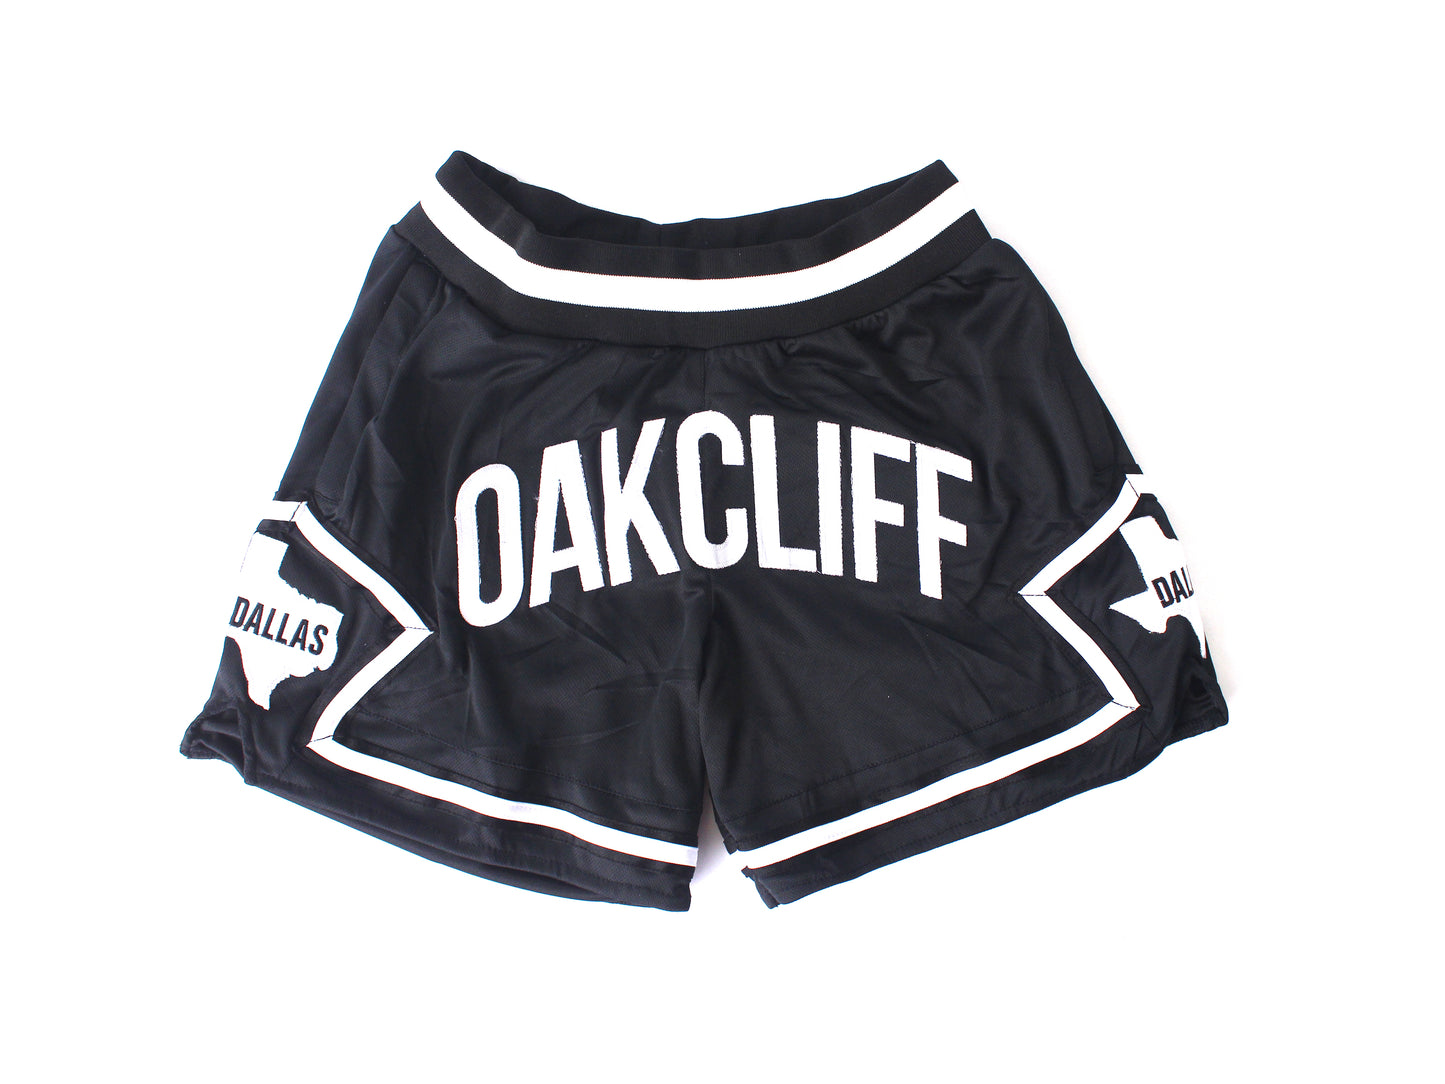 Oak Cliff Shorts